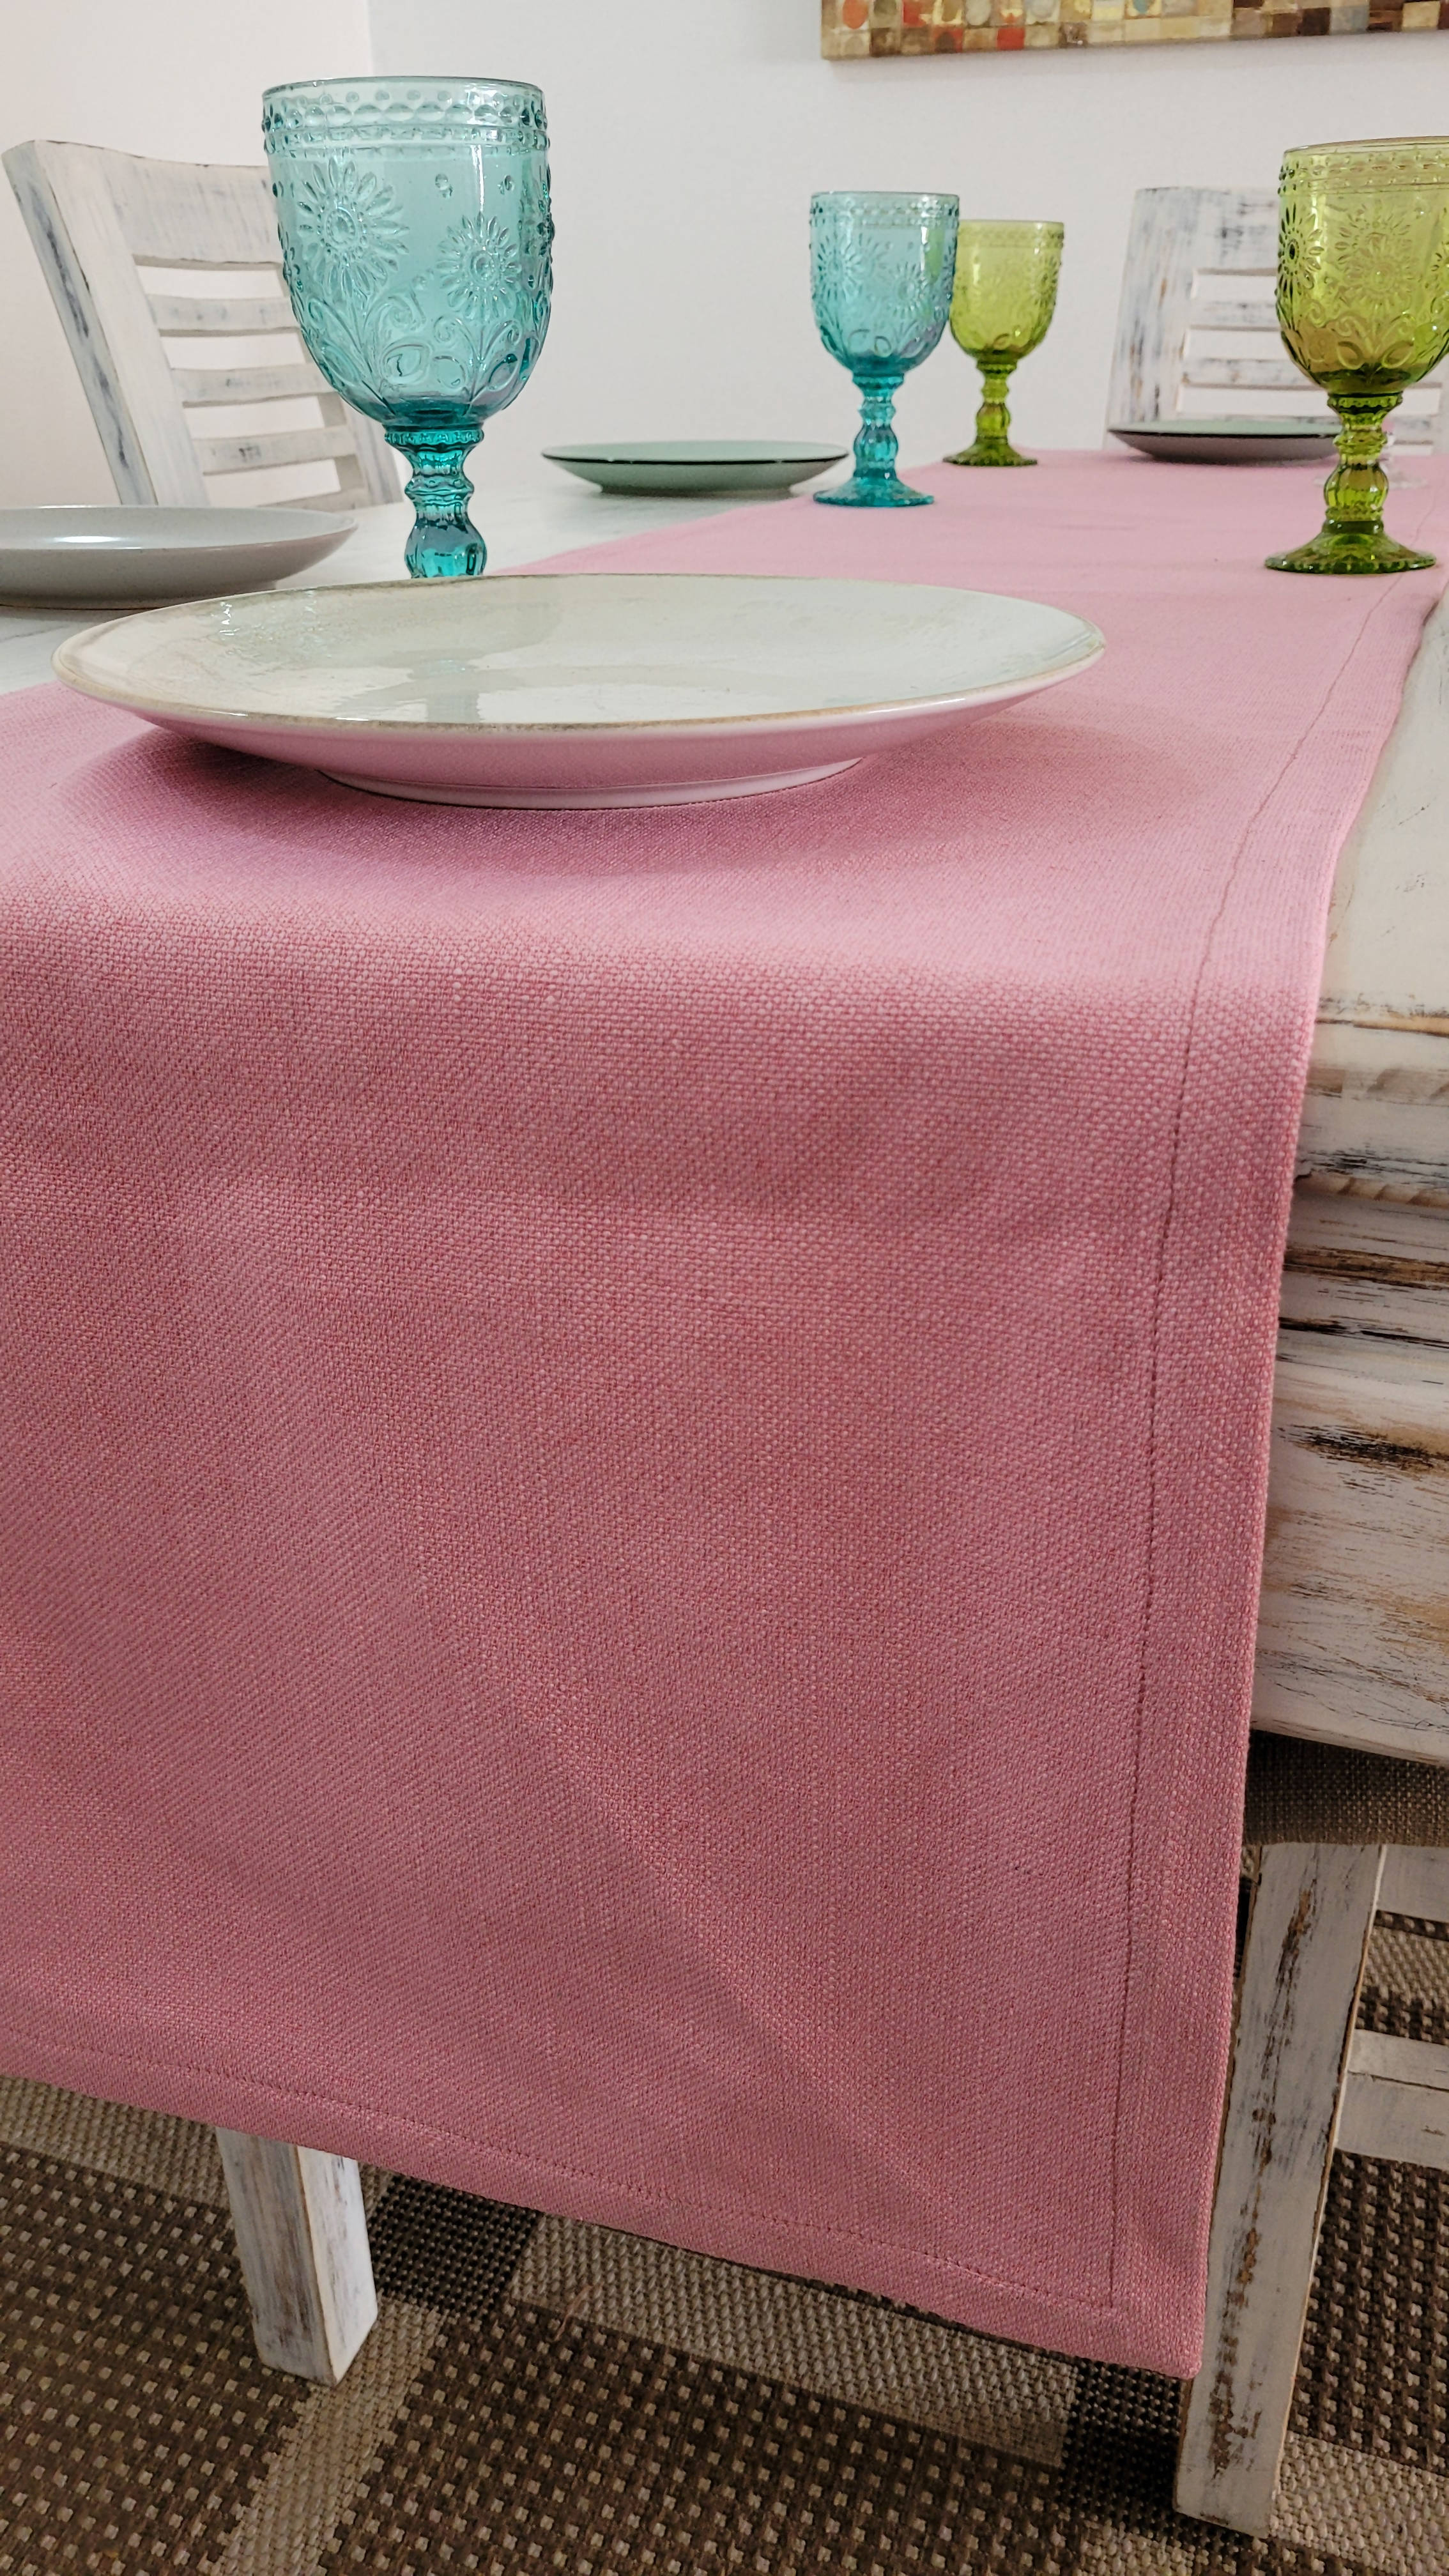 Camino de mesa de lino tono rosado pastel